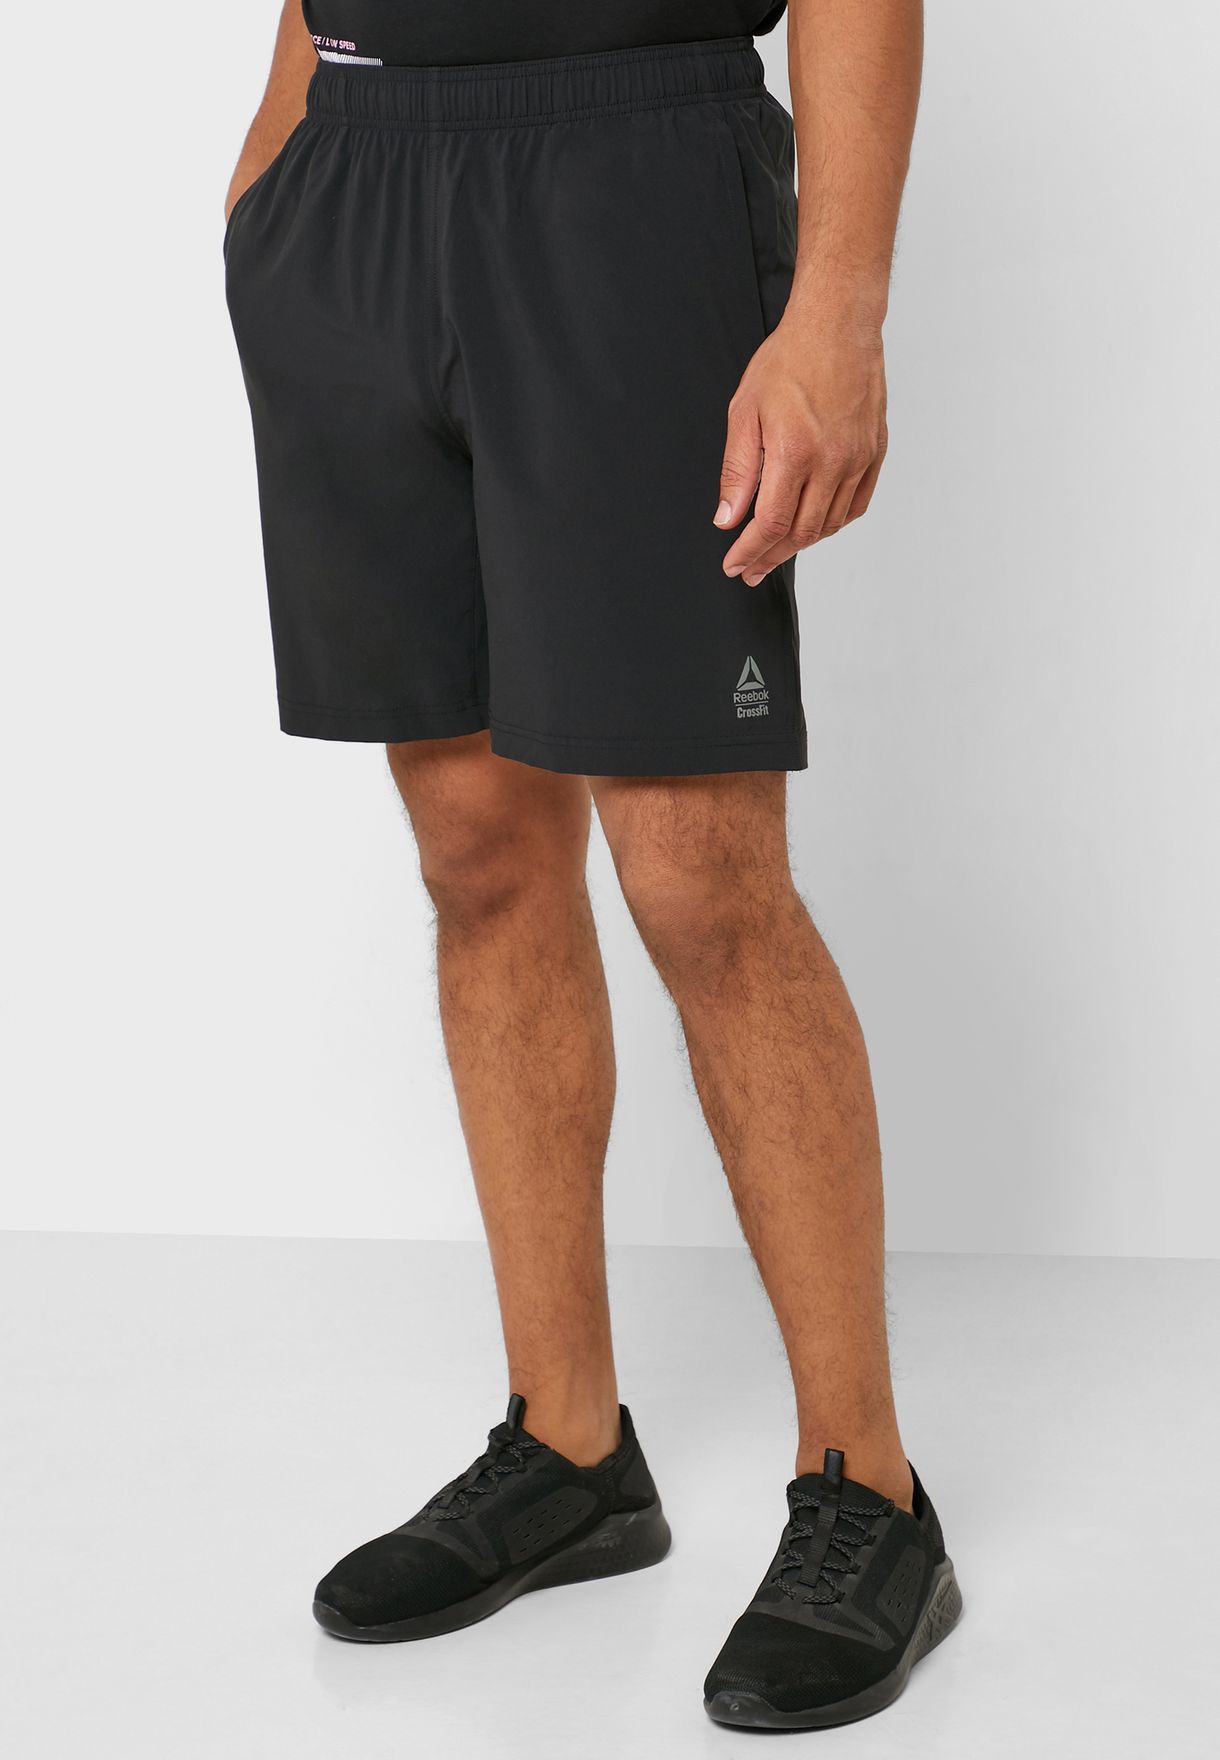 reebok crossfit austin shorts